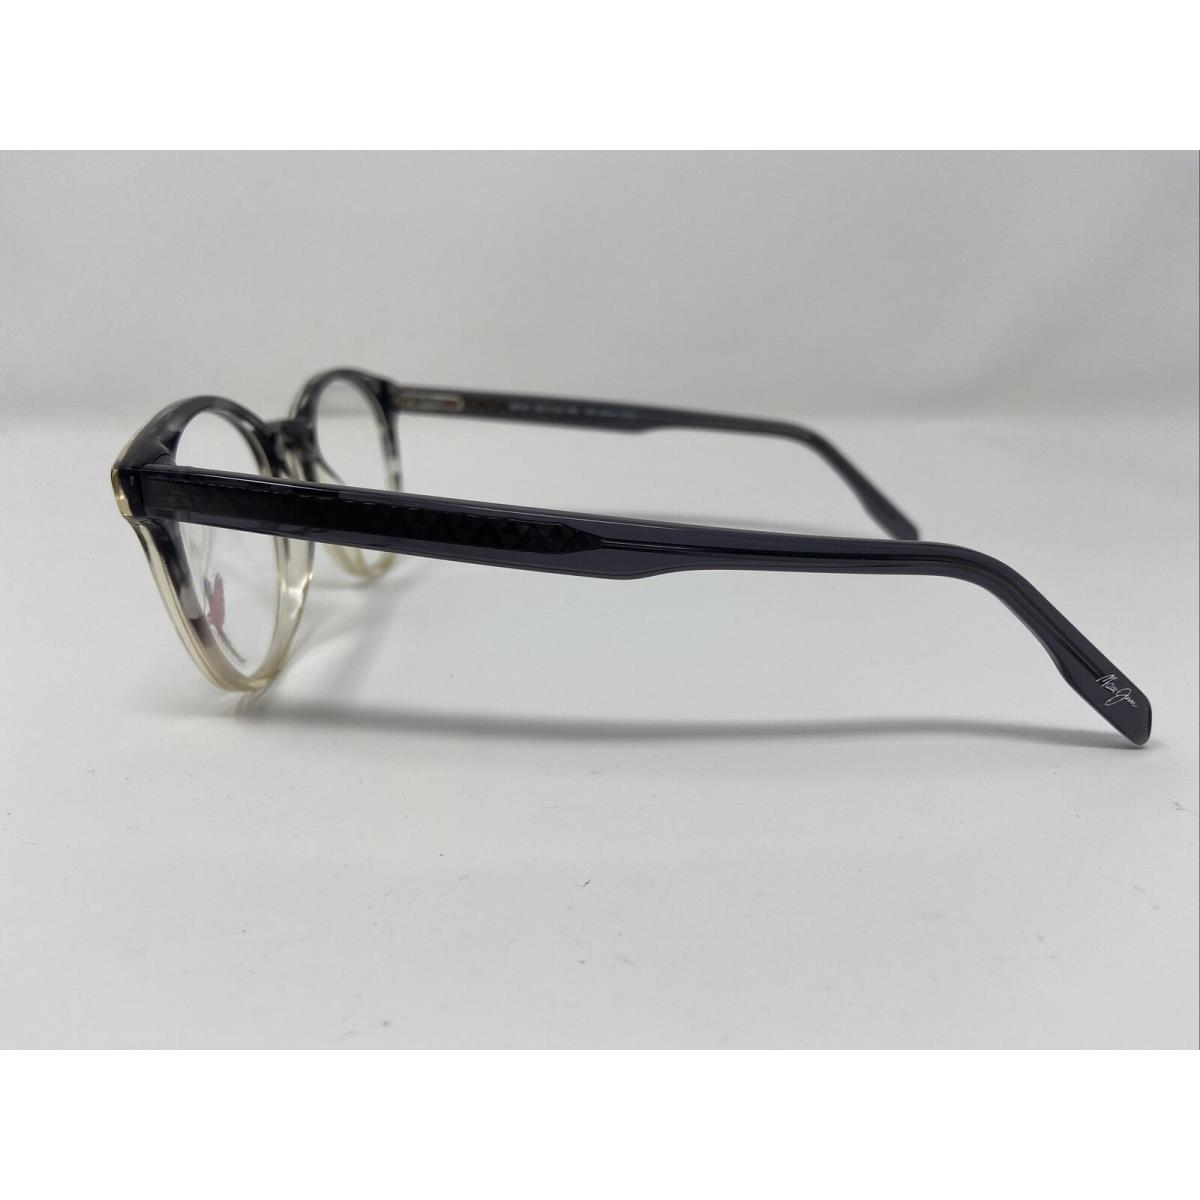 Maui Jim eyeglasses  - Gray Frame 1